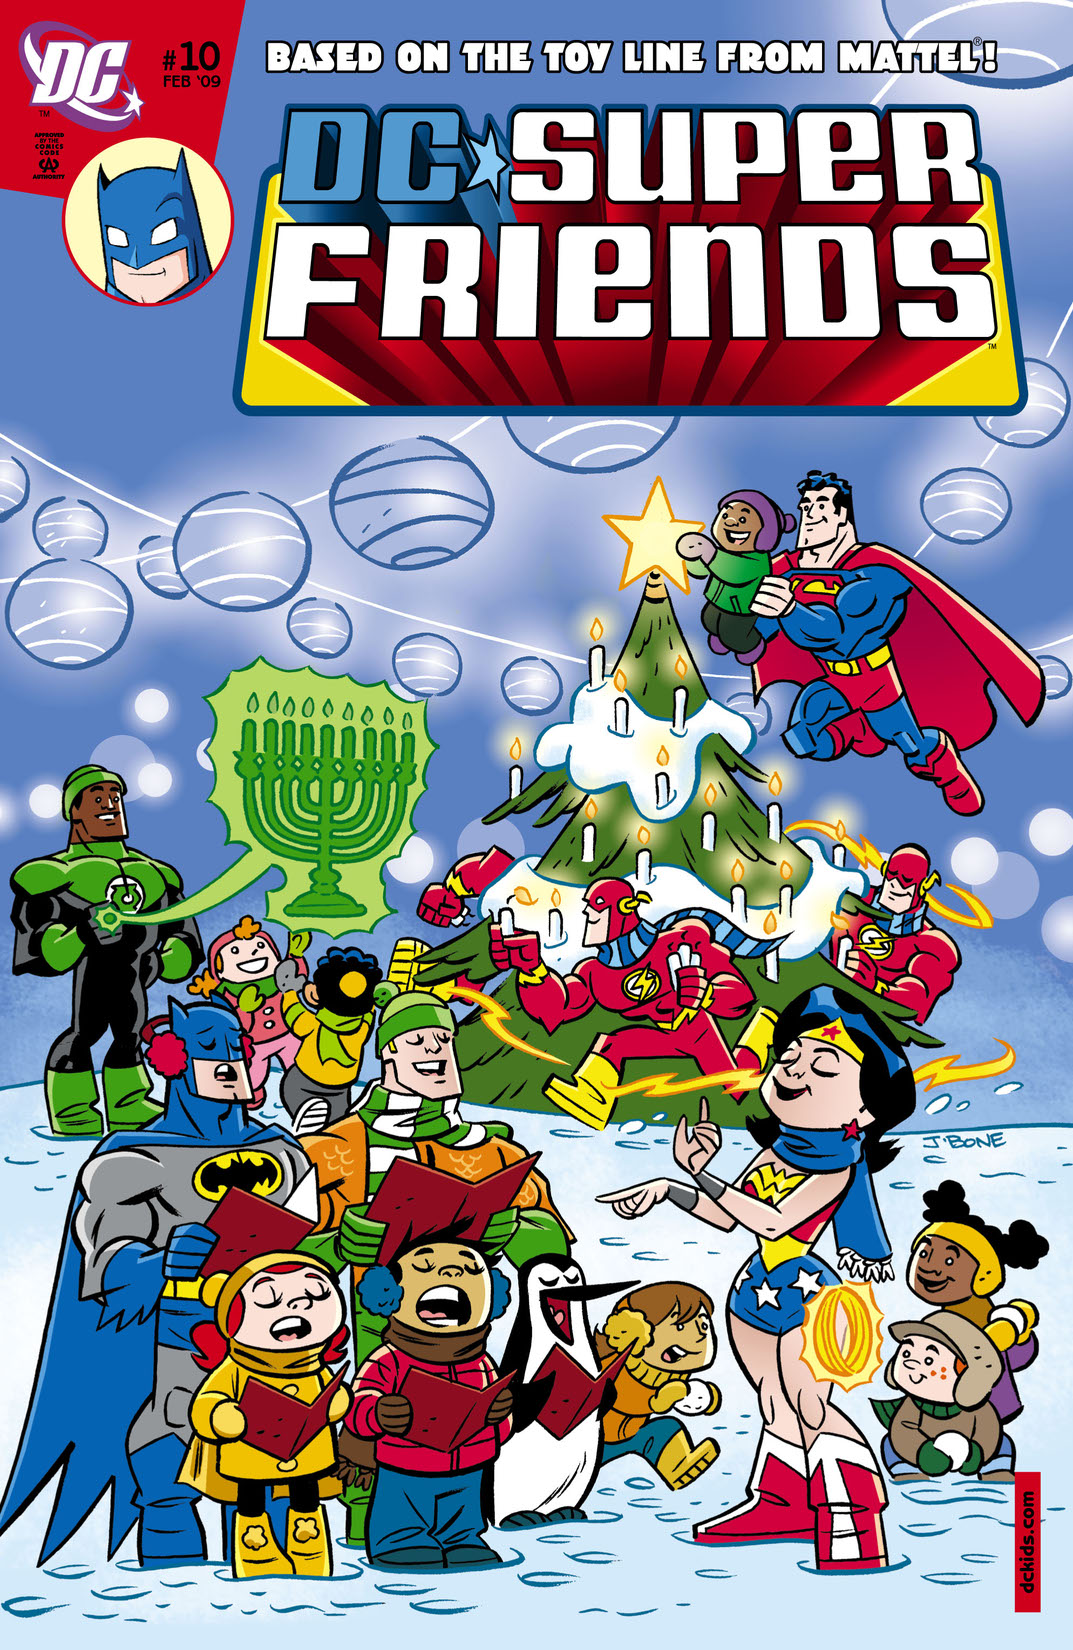 Super Friends (2008-) #10 preview images